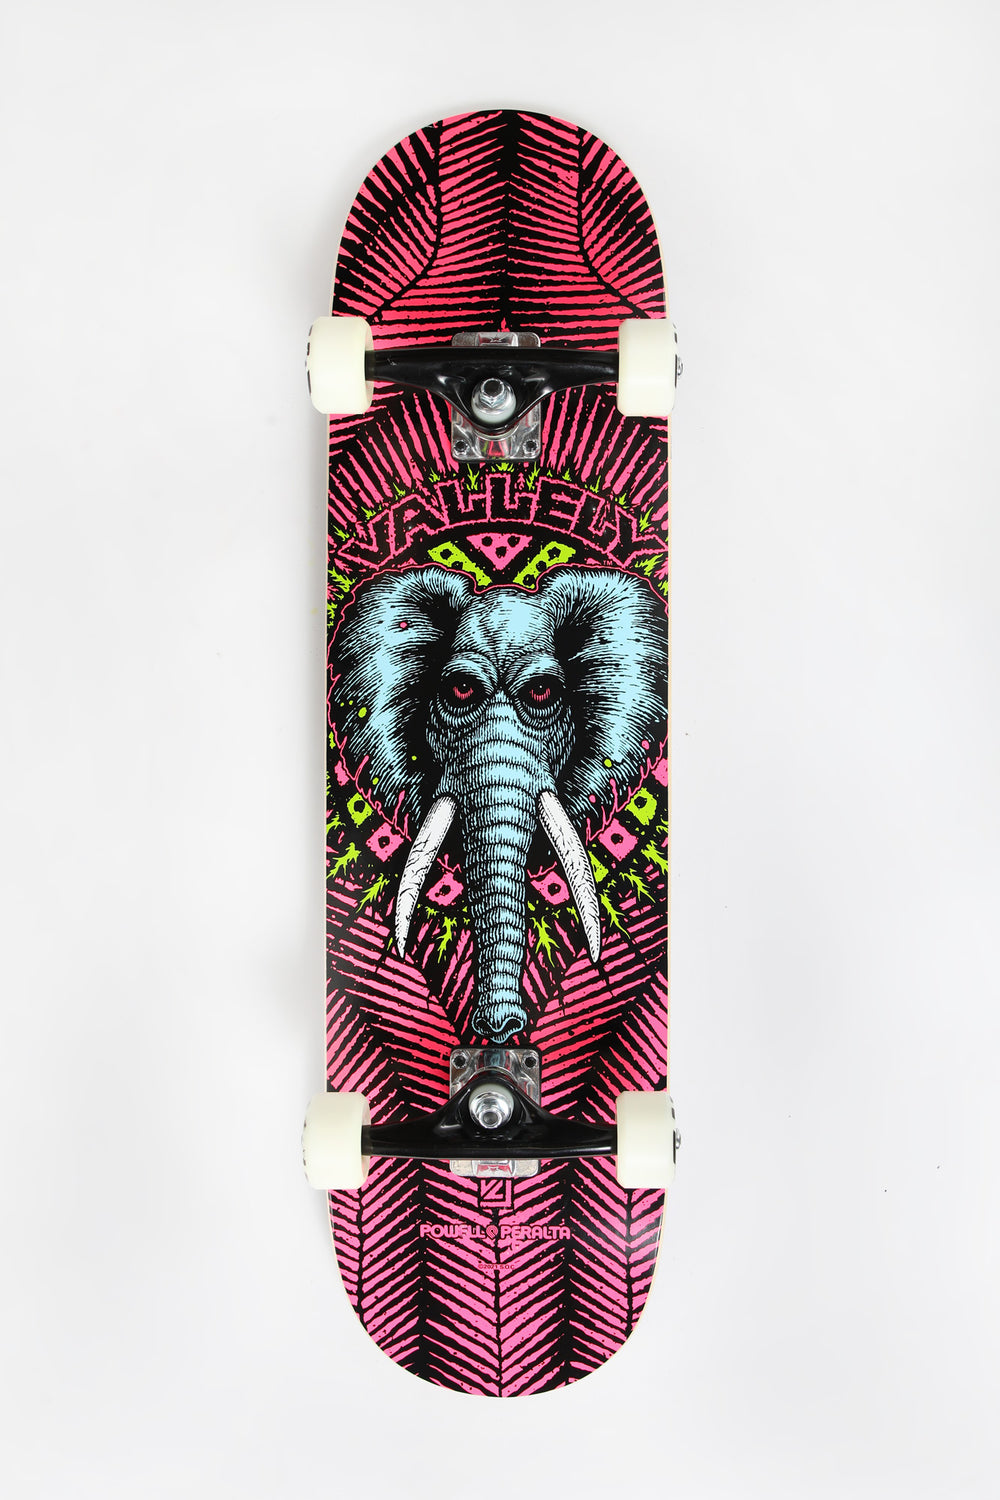 Skateboard Vallely Elephant Powell Peralta Skateboard Vallely Elephant Powell Peralta